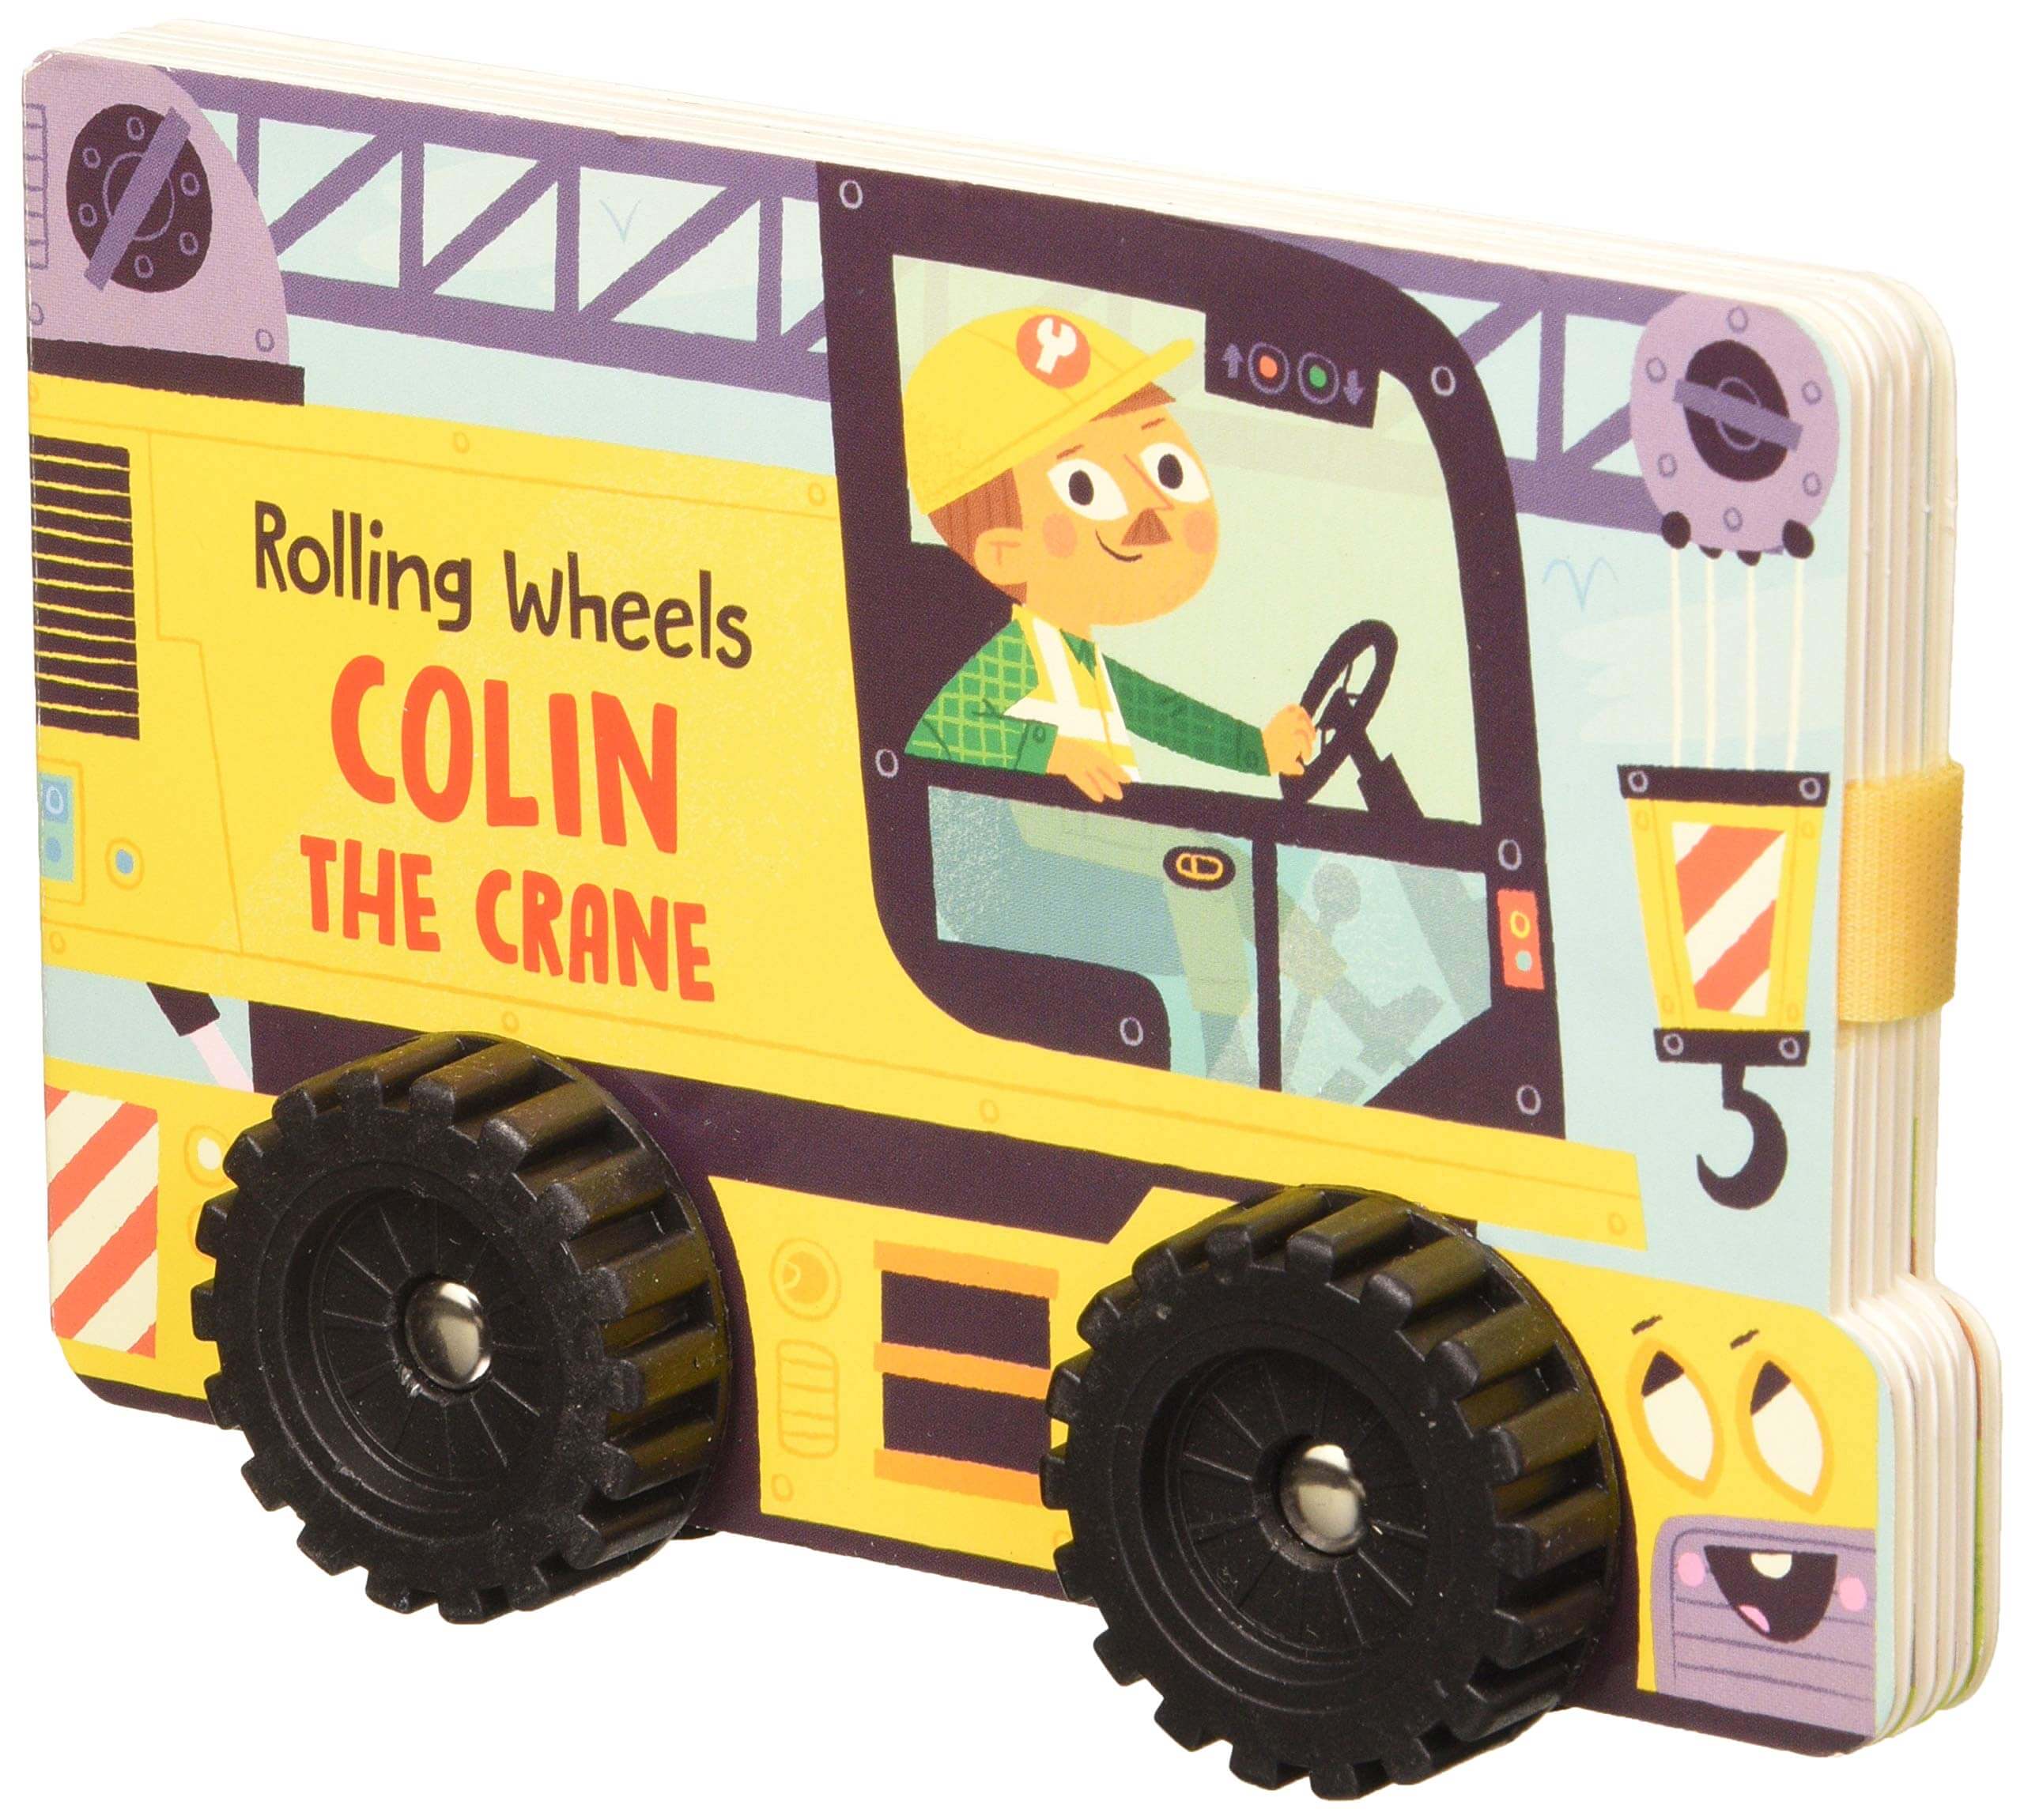 Rolling wheels - Colin the crane